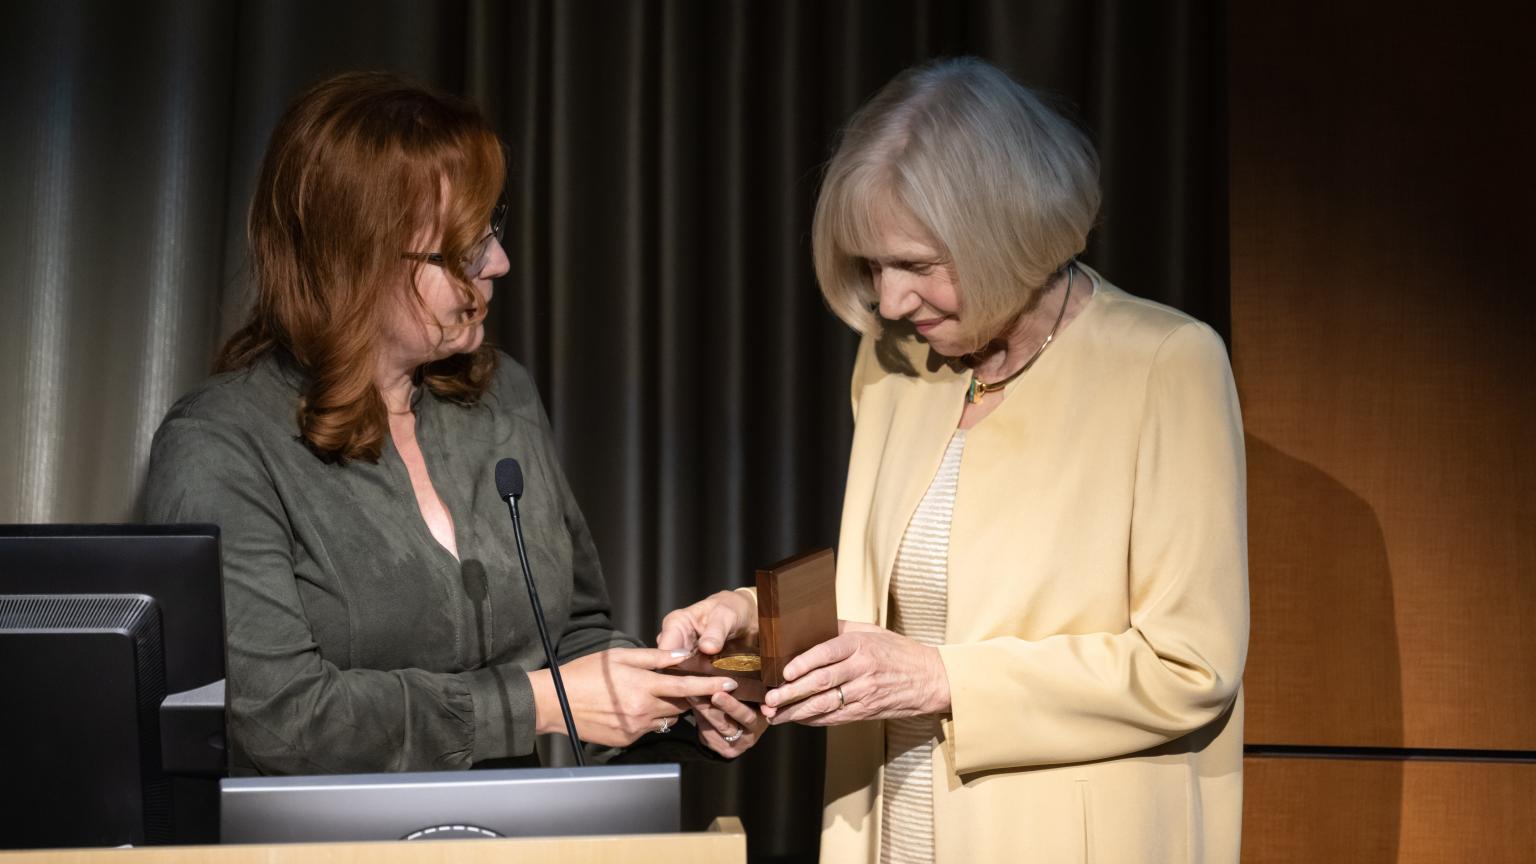 Dr. Eva Feldman receiving a medal from Dr. Dawn Kleindorfer